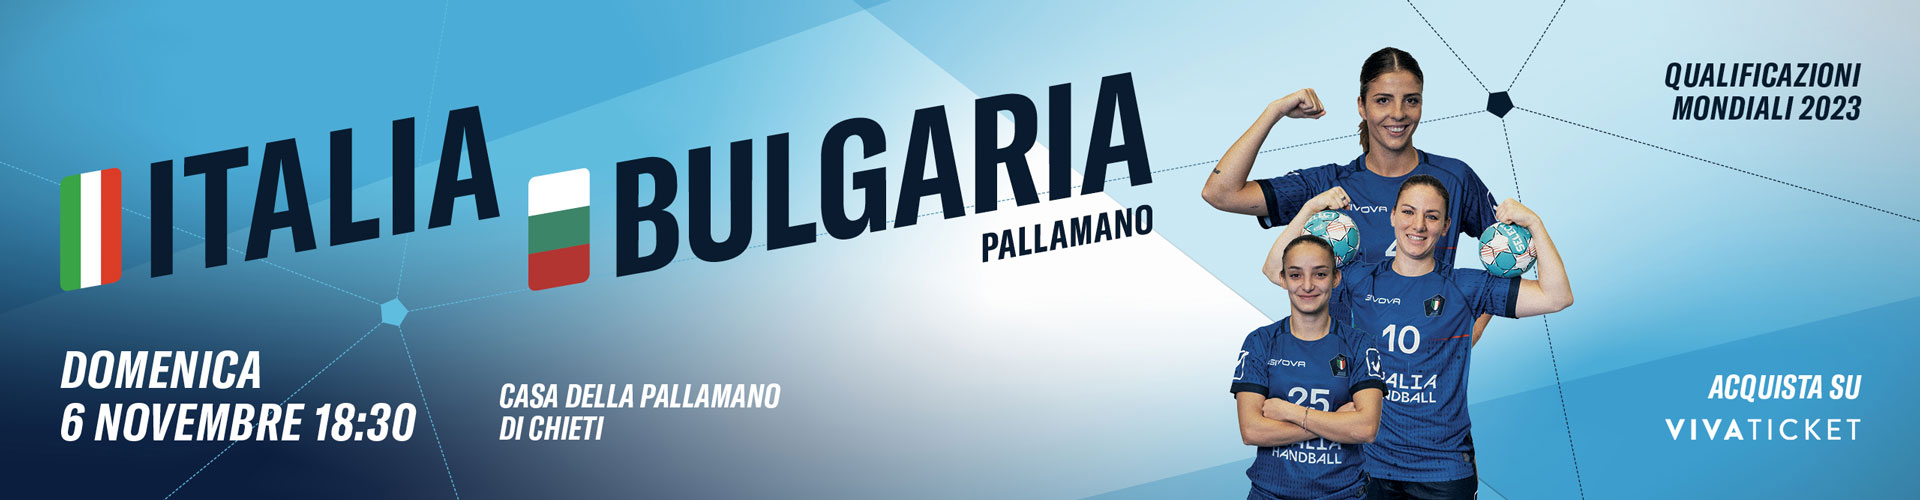 FIGH Italia Bulgaria social banner